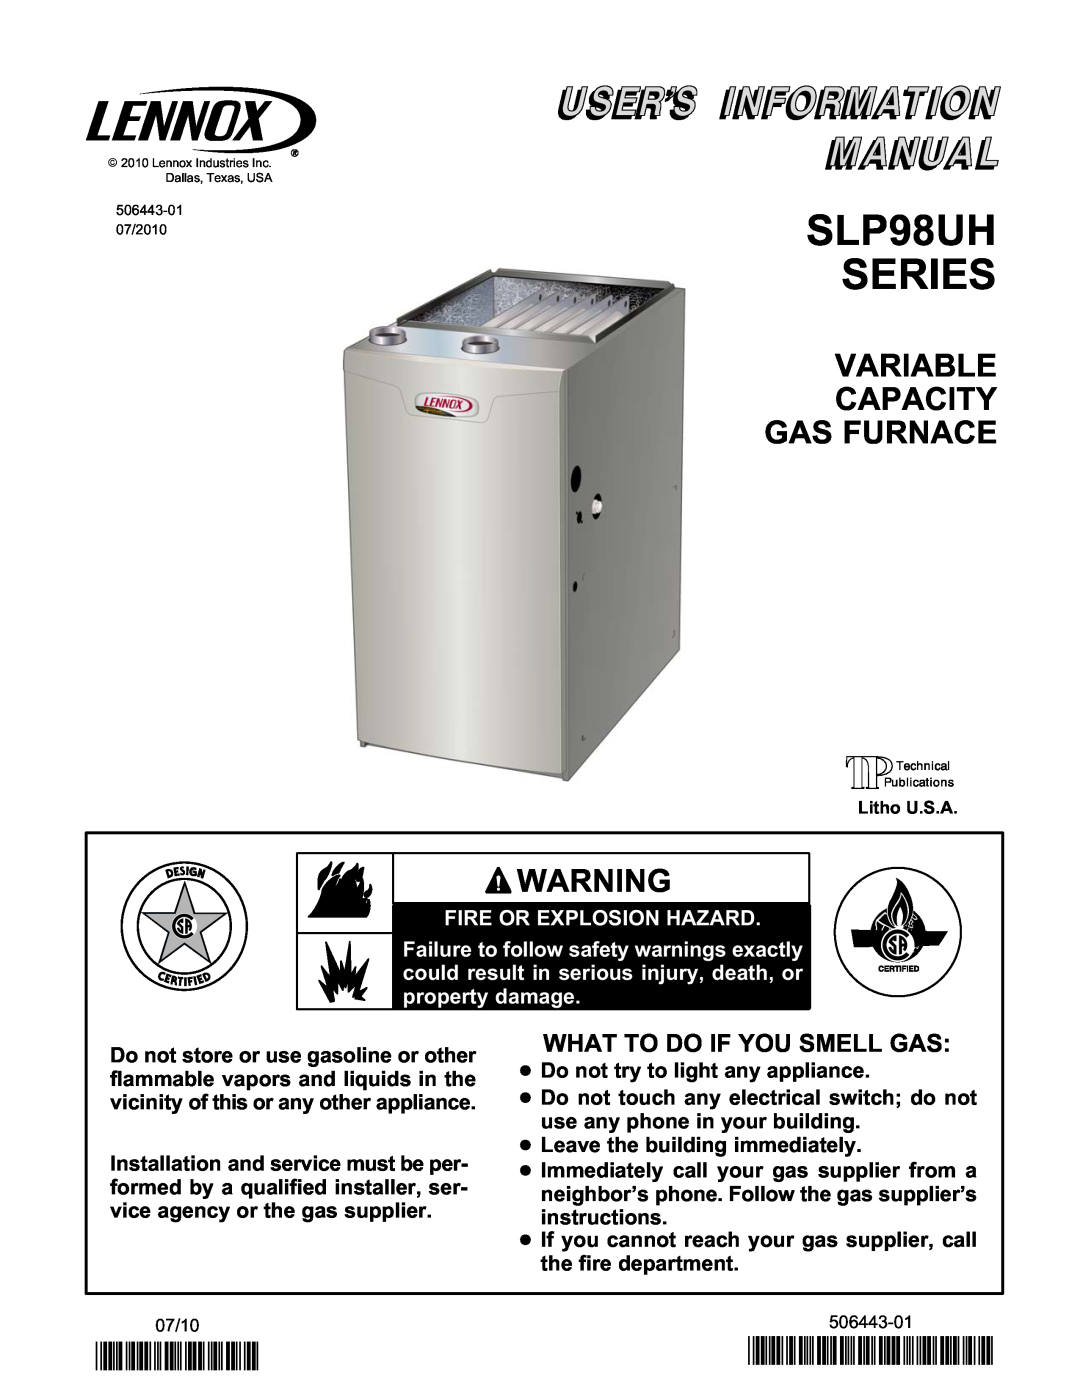 Lennox International Inc cariable capacity gas furnace manual Variable Capacity Gas Furnace, SLP98UH SERIES, 2P0710 